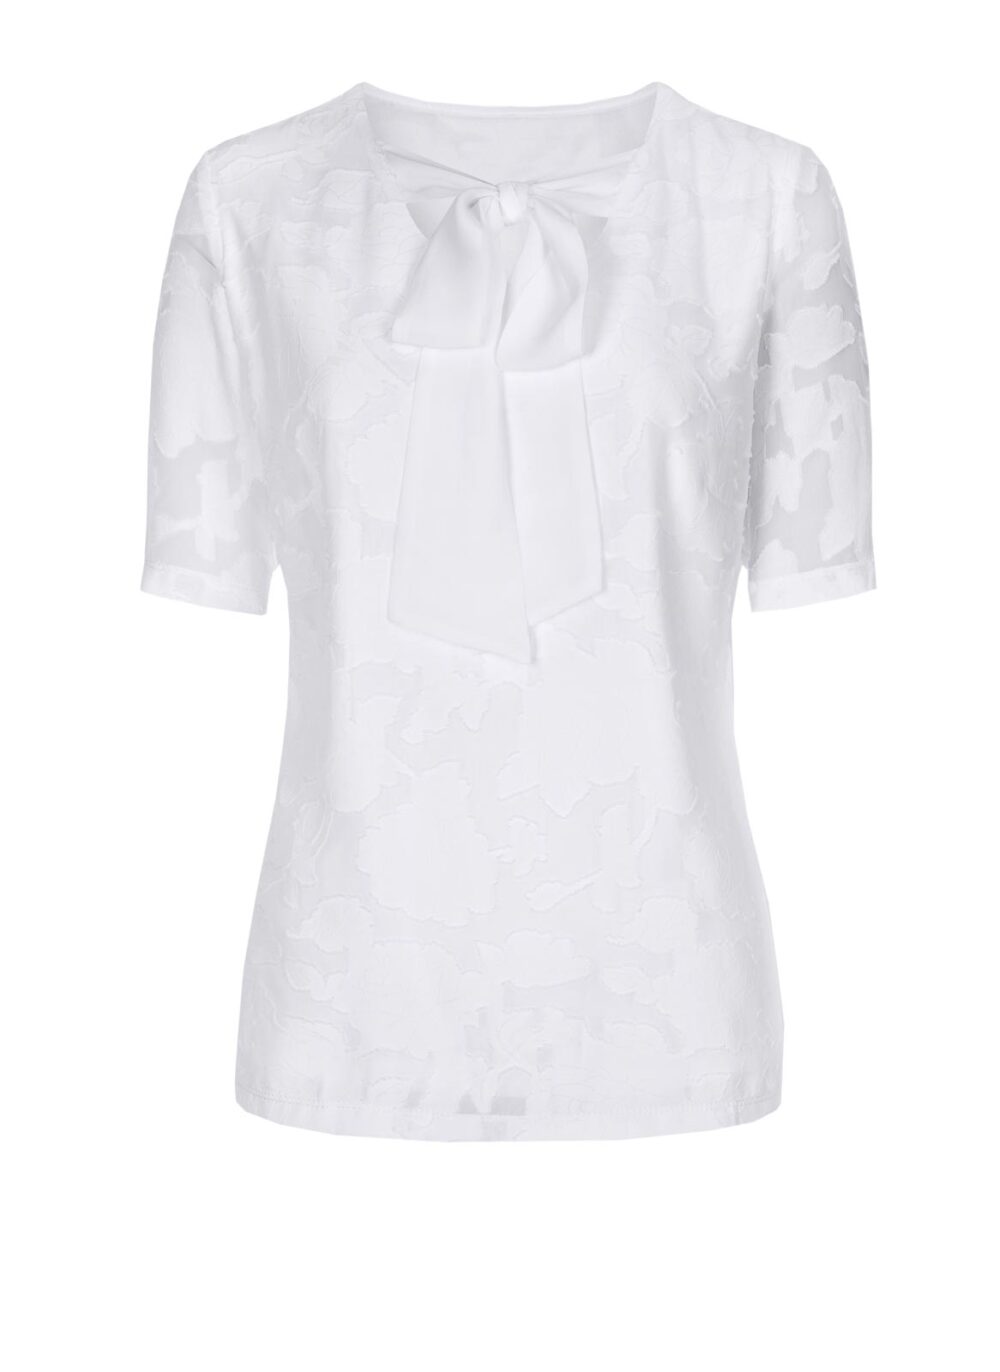 Damen Bluse weiß Oberteil halbarm Tunika Shirt Sommer Création L Missforty